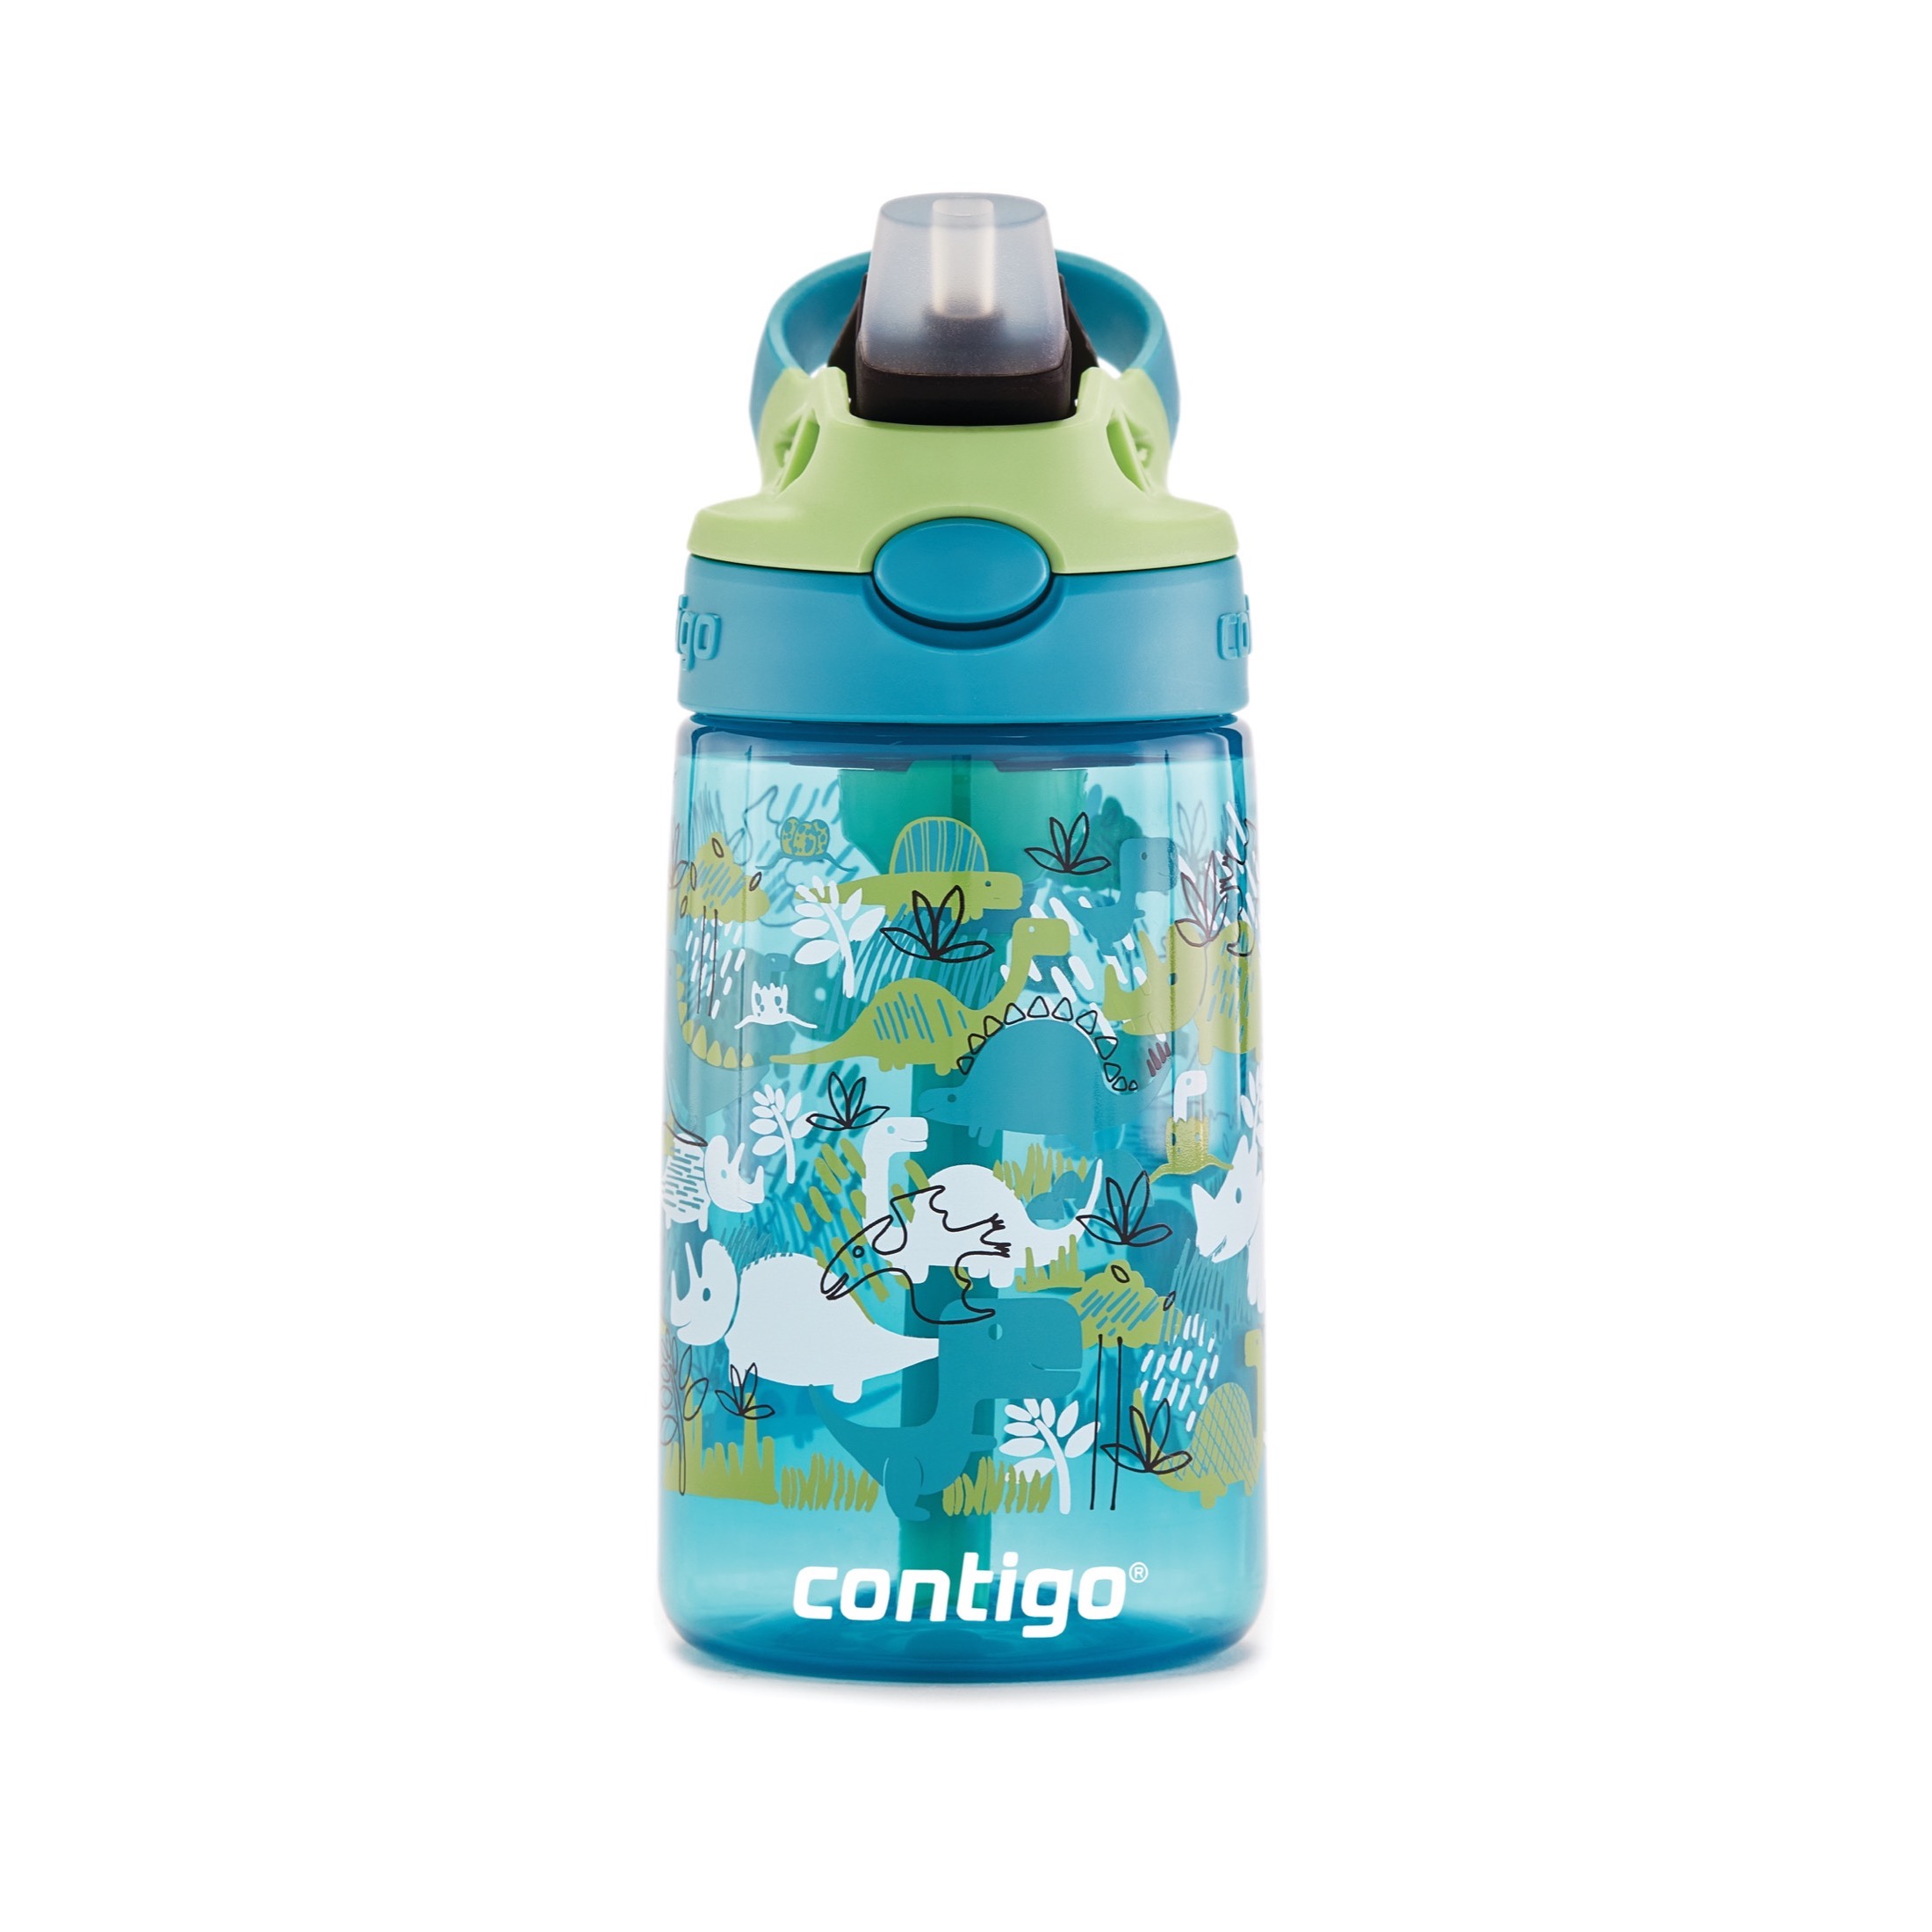 Contigo Kids Water Bottle with Autospout Straw Green & Blue, 14 fl oz. - image 8 of 8